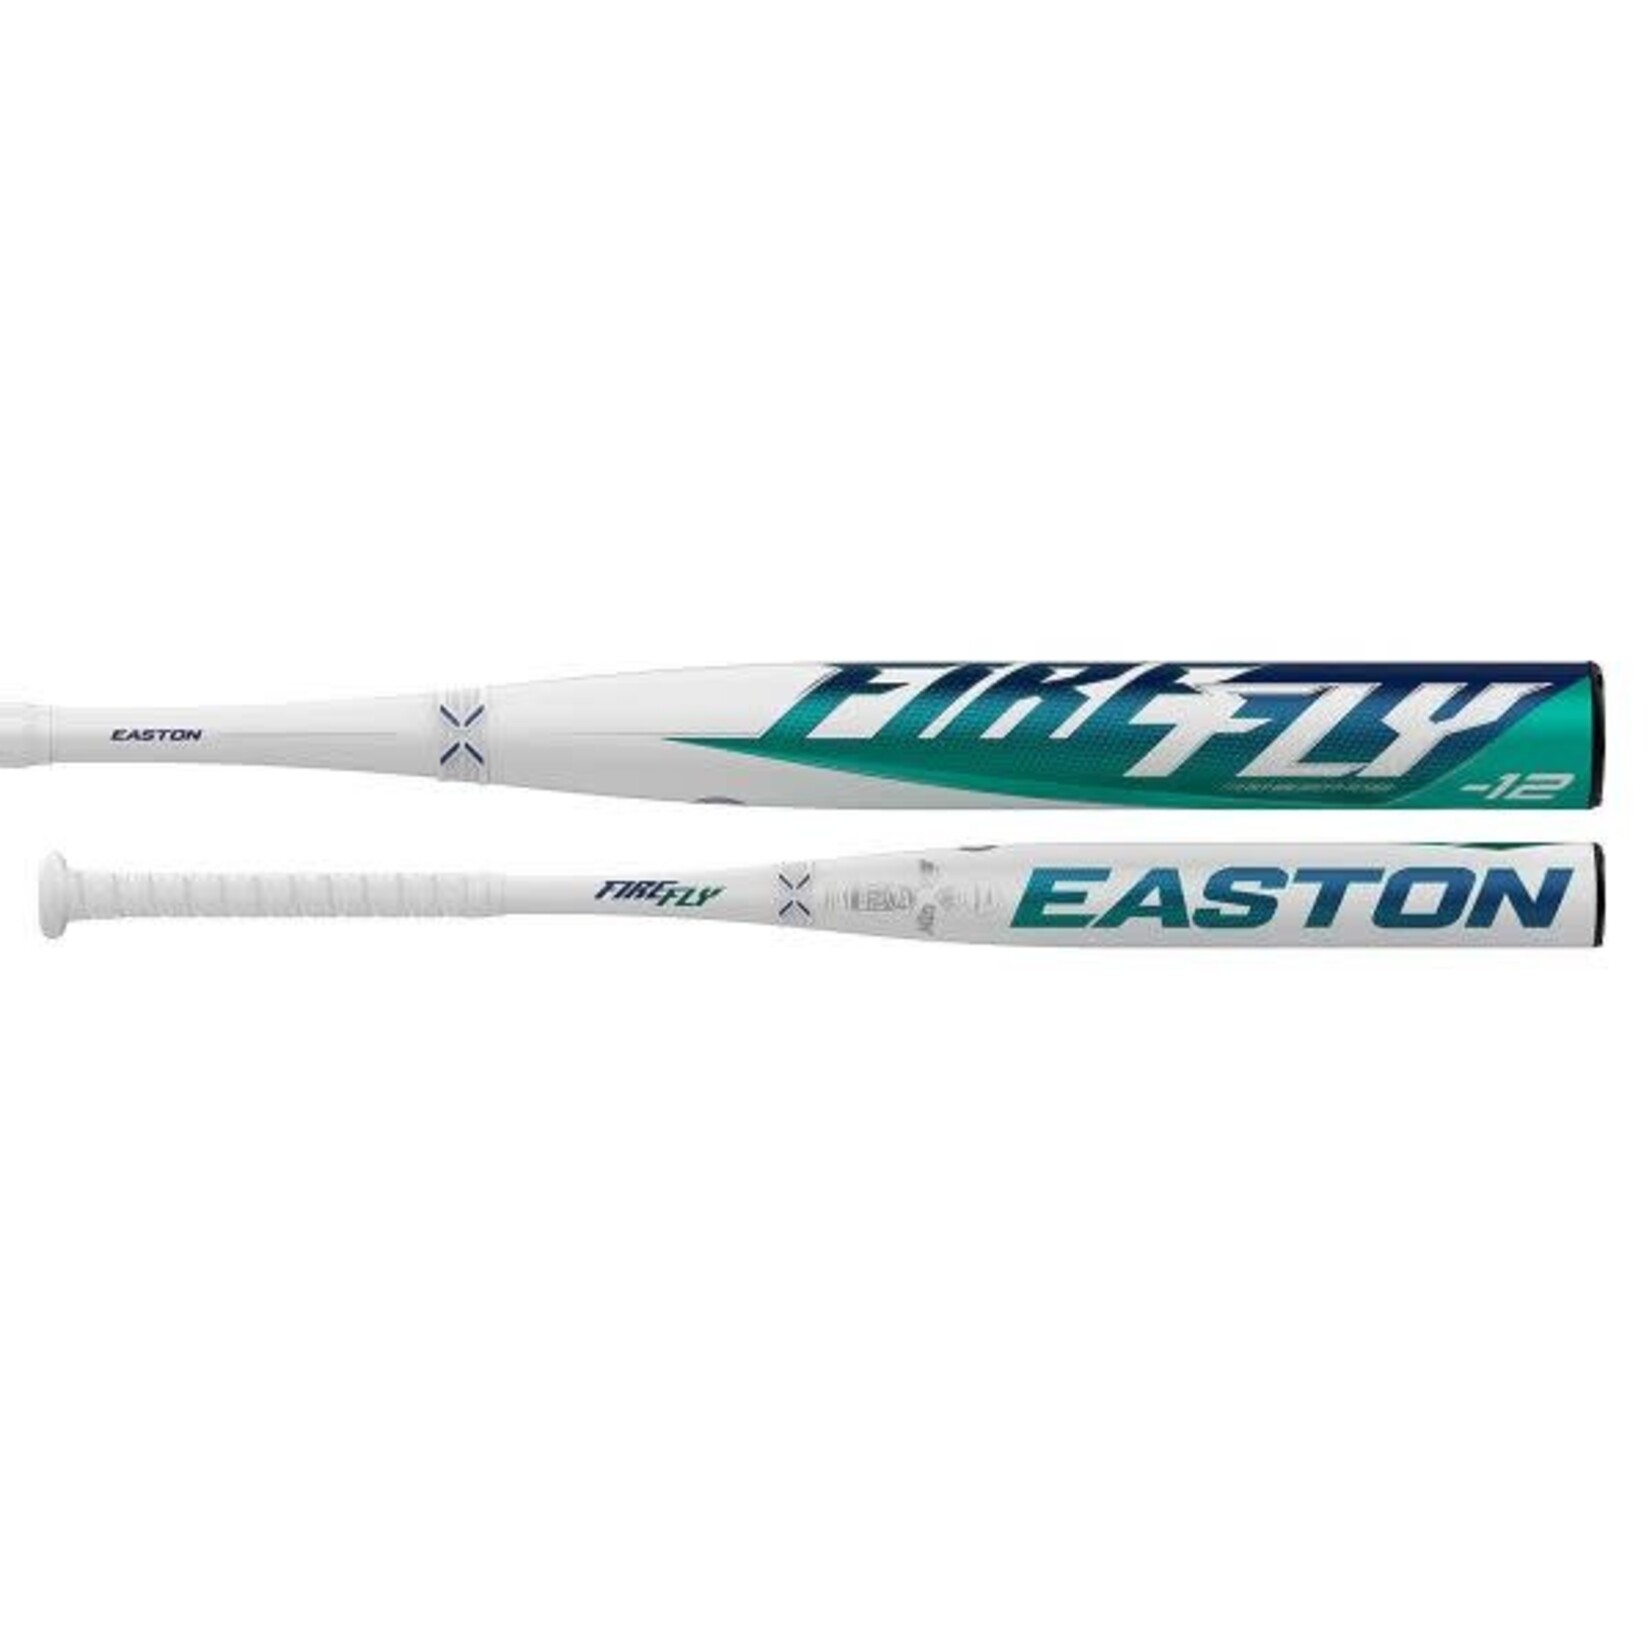 Easton Easton Baseball Bat, Fire Fly, FP22FF12, Fastpitch, -12